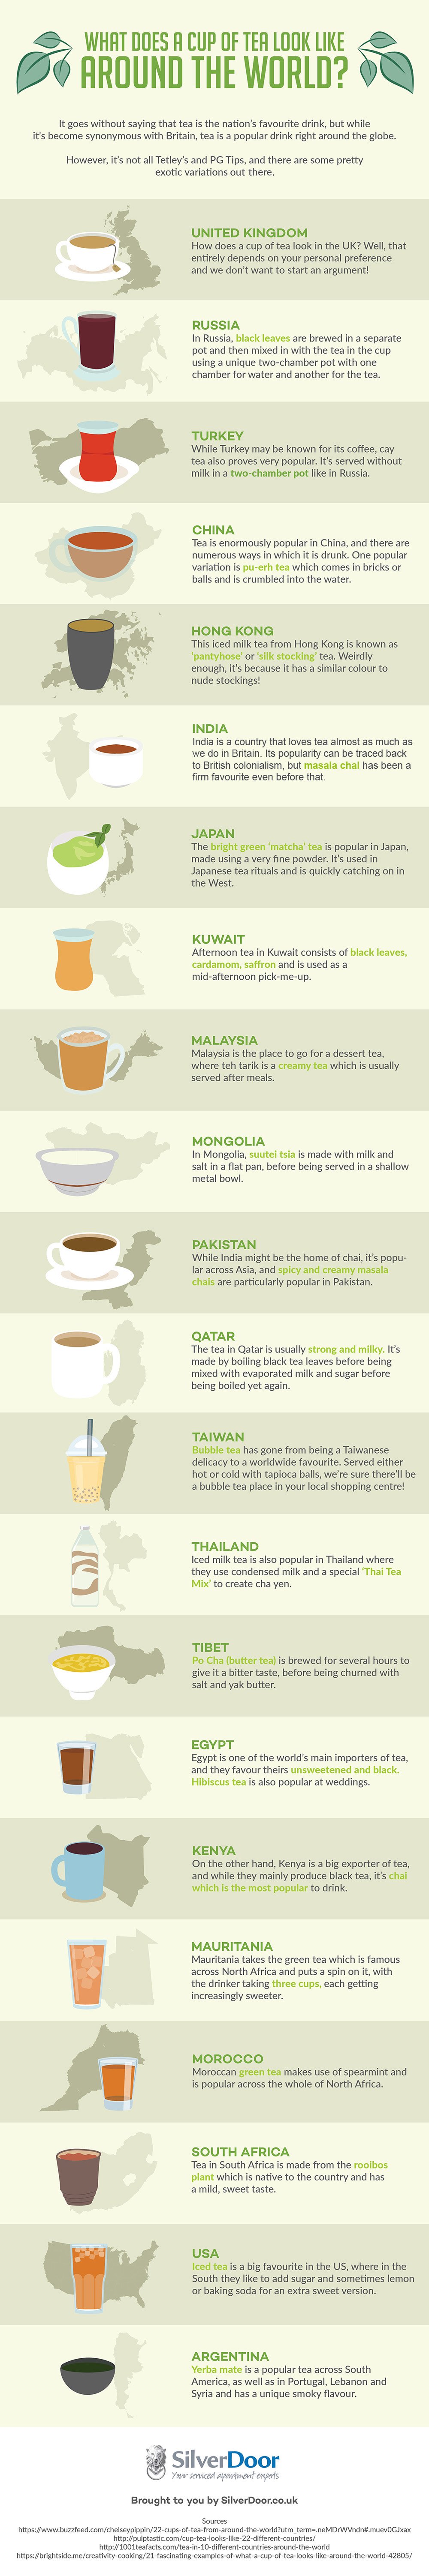 xa-cup-of-tea-around-the-world.jpg.pagespeed.ic.zfn-K7m_py